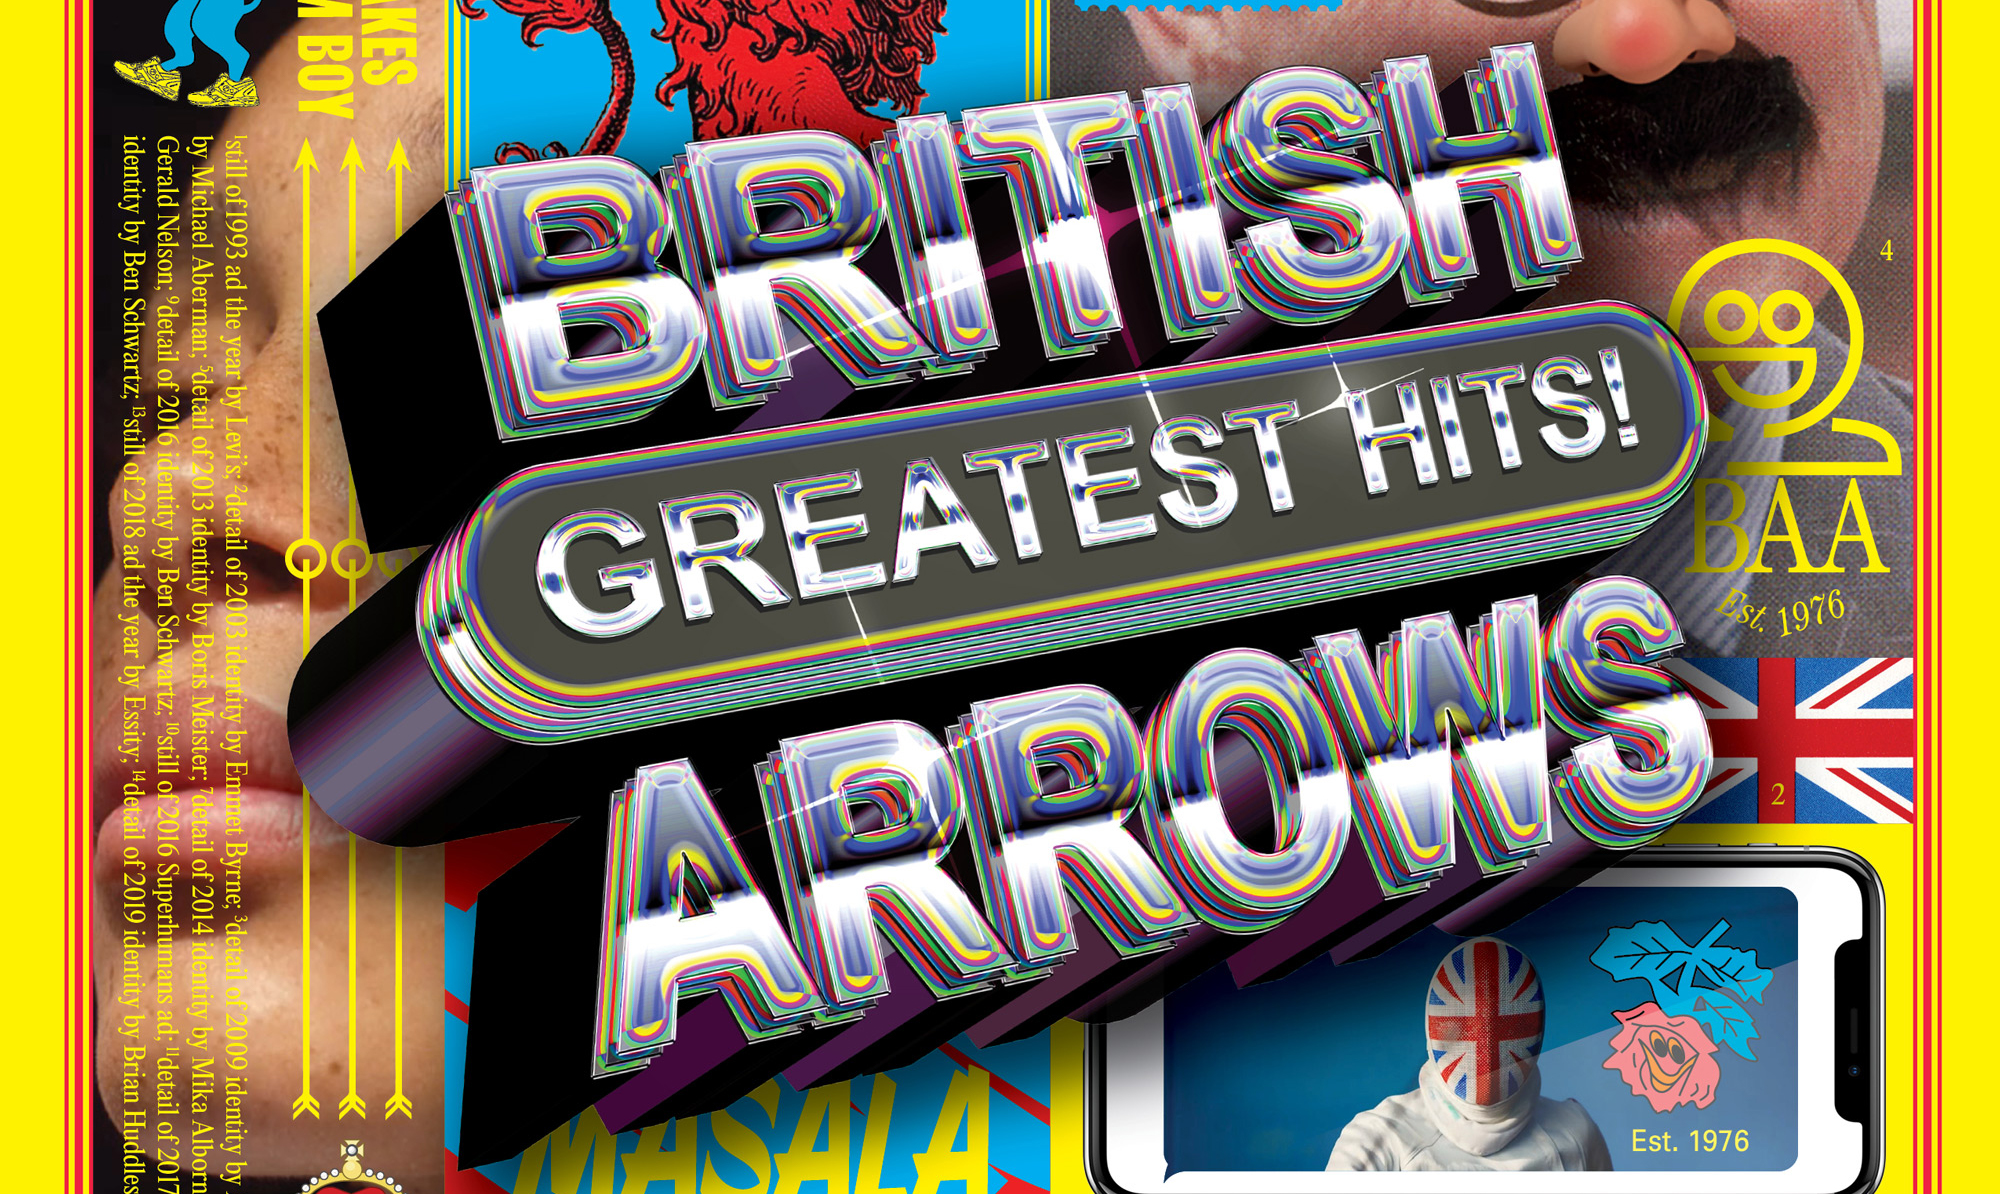 British Arrows Awards